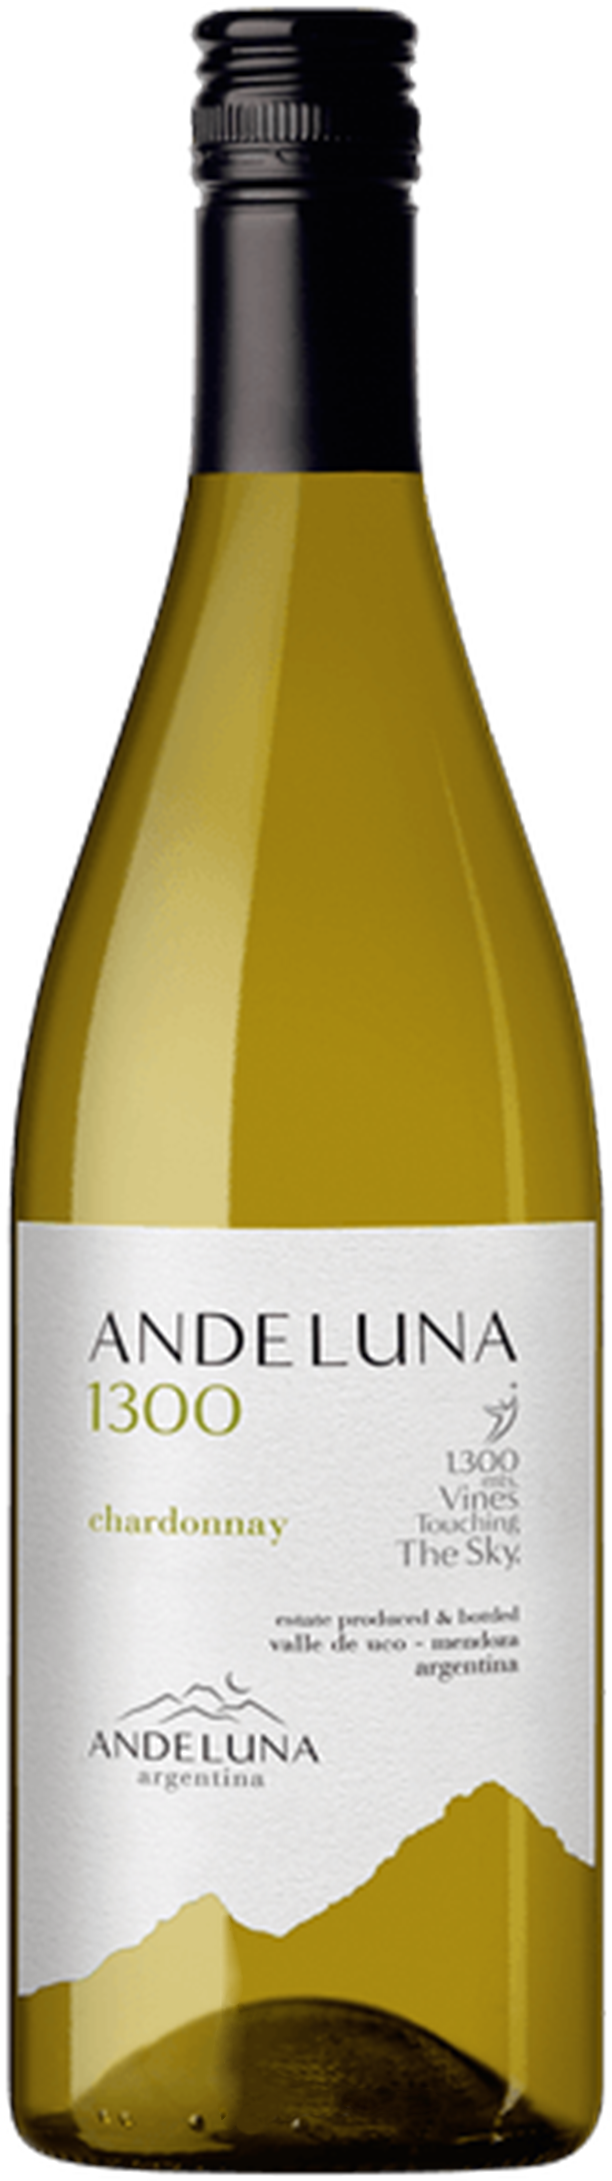 Andeluna 1300 Chardonnay 2019